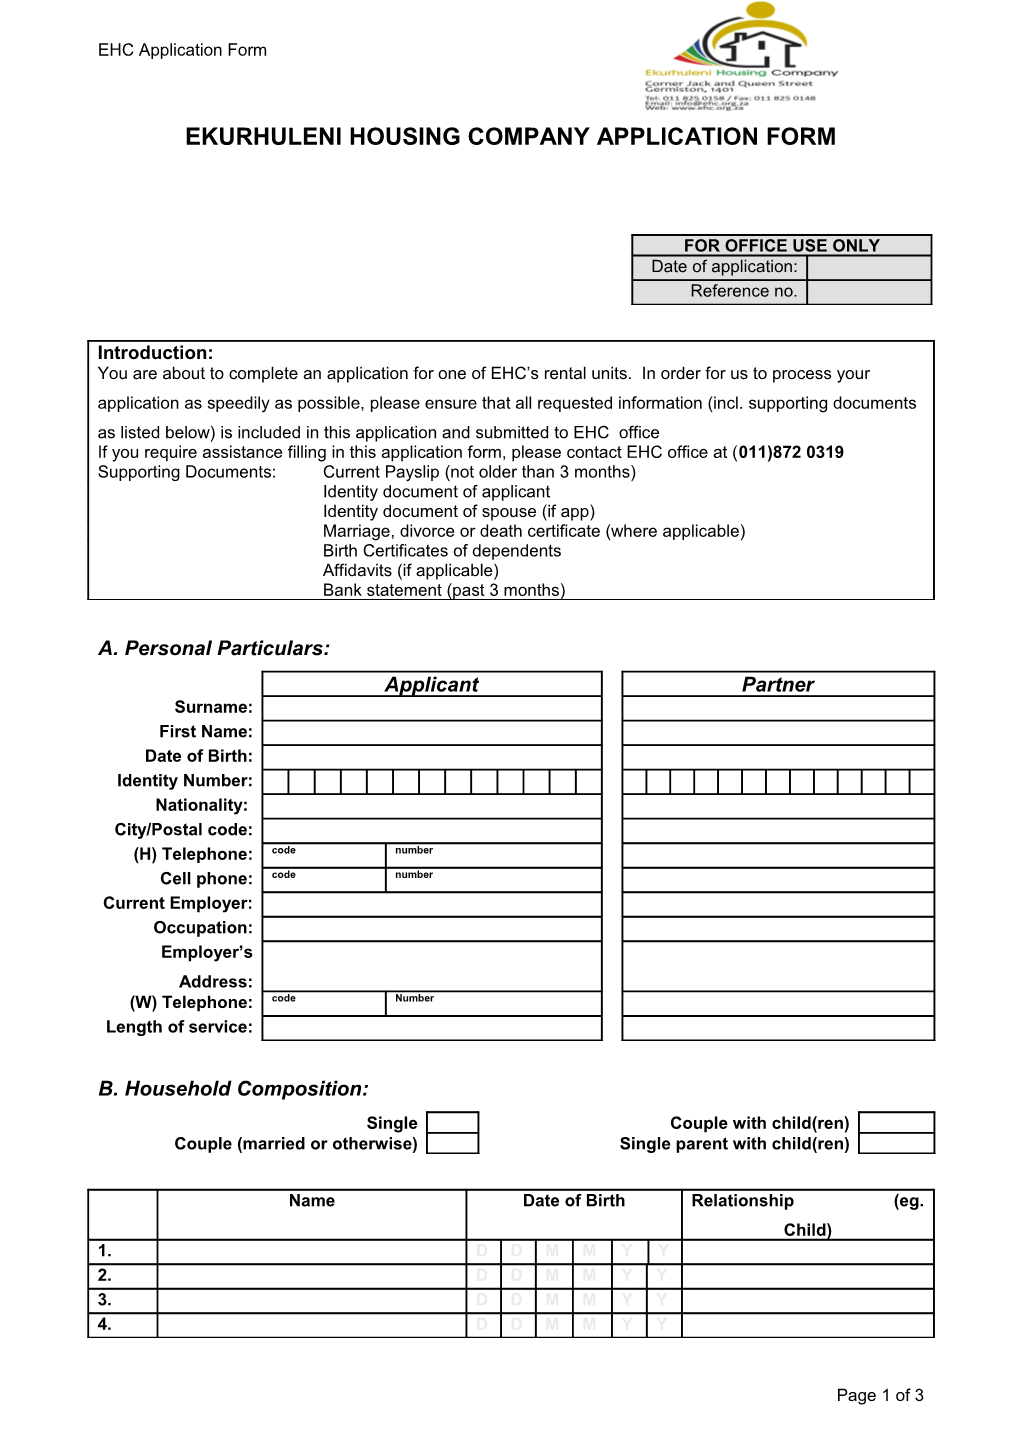 Ekurhuleni Housing Company Application Form